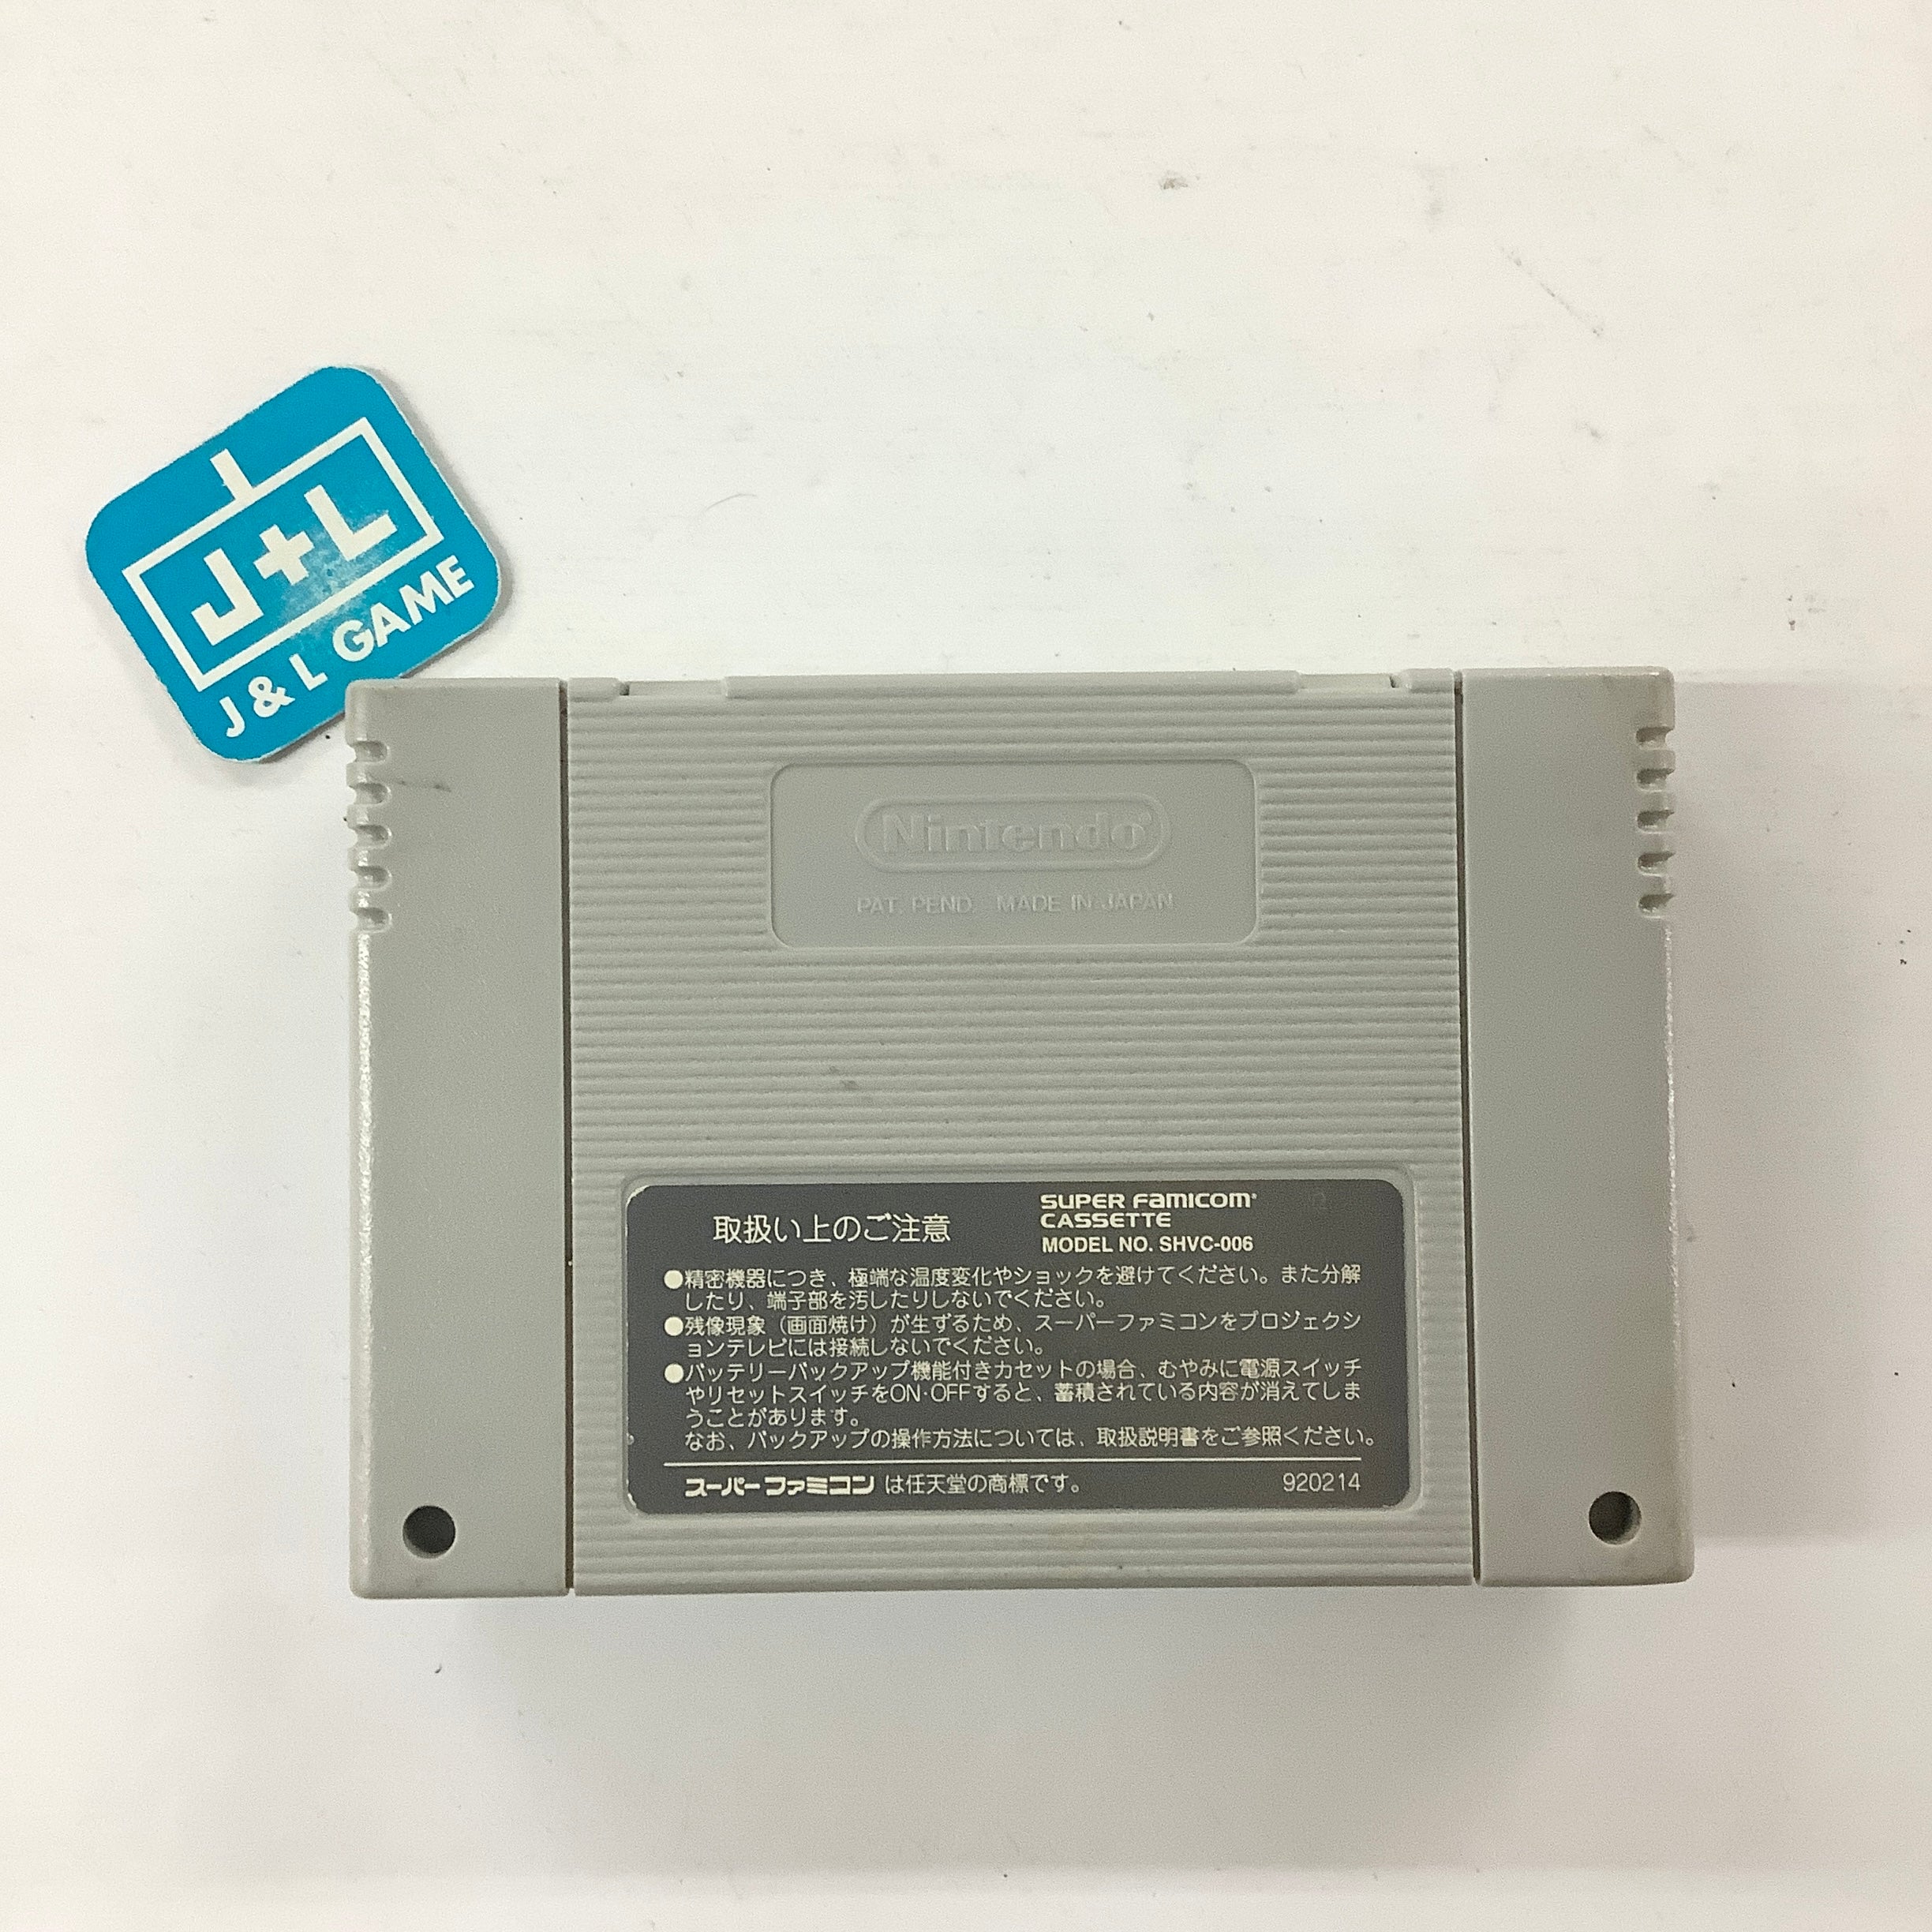 Wonder Project J: Kikai no Shonen Pino - Super Famicom [Pre-Owned] (Japanese Import) Video Games Enix Corporation   